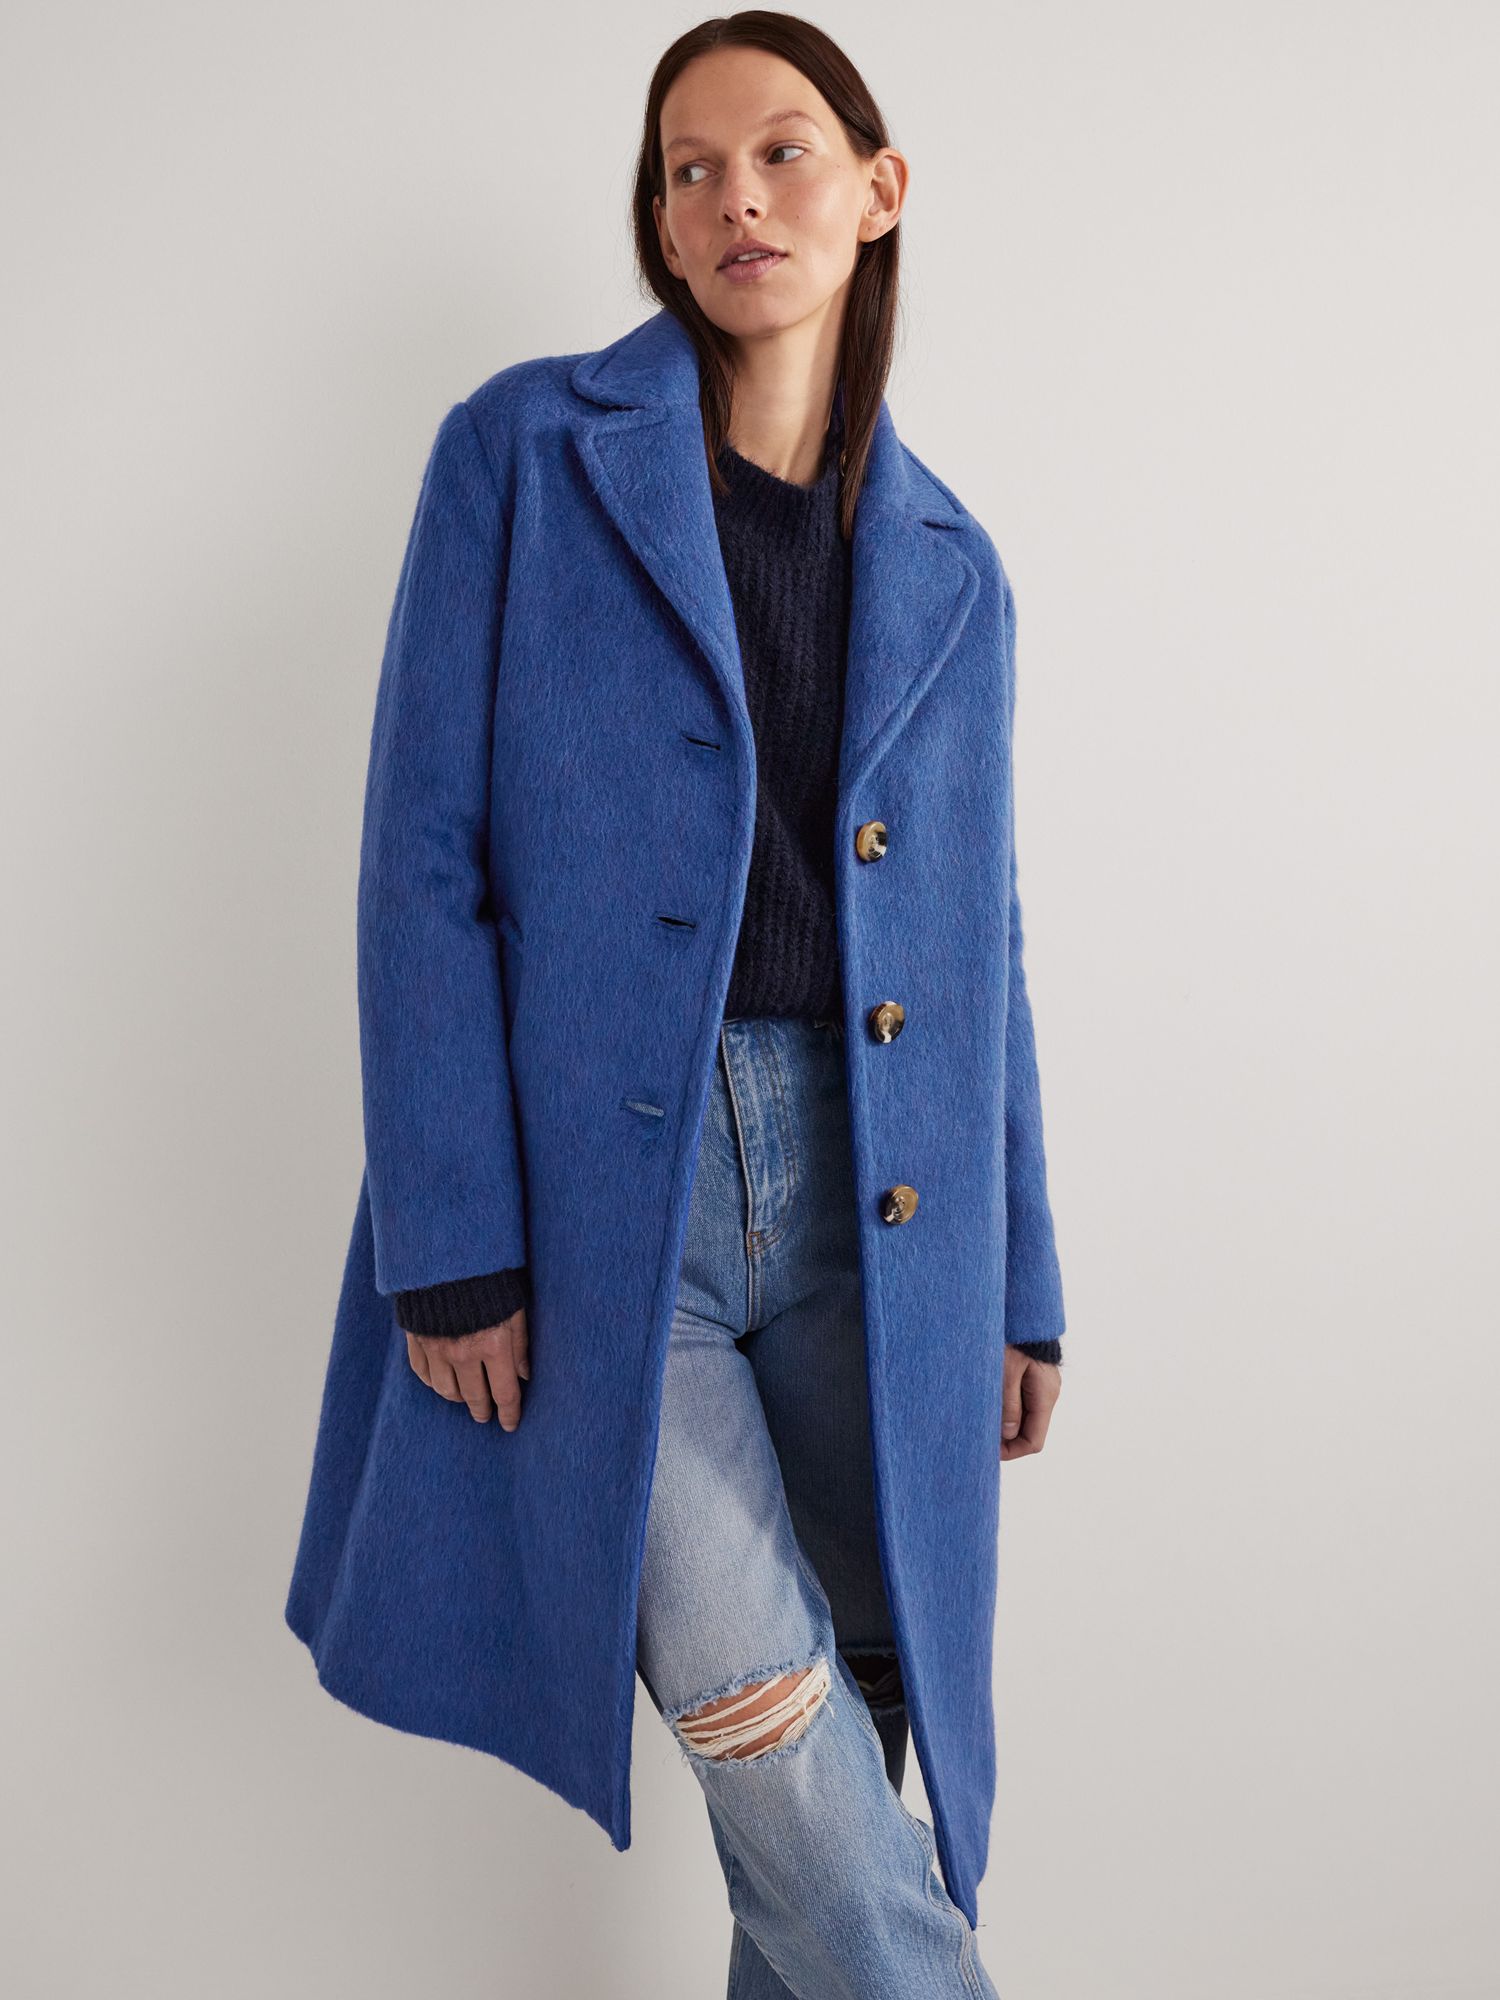 Boden Italian Wool Blend Collared Coat, Sea Blue at John Lewis & Partners